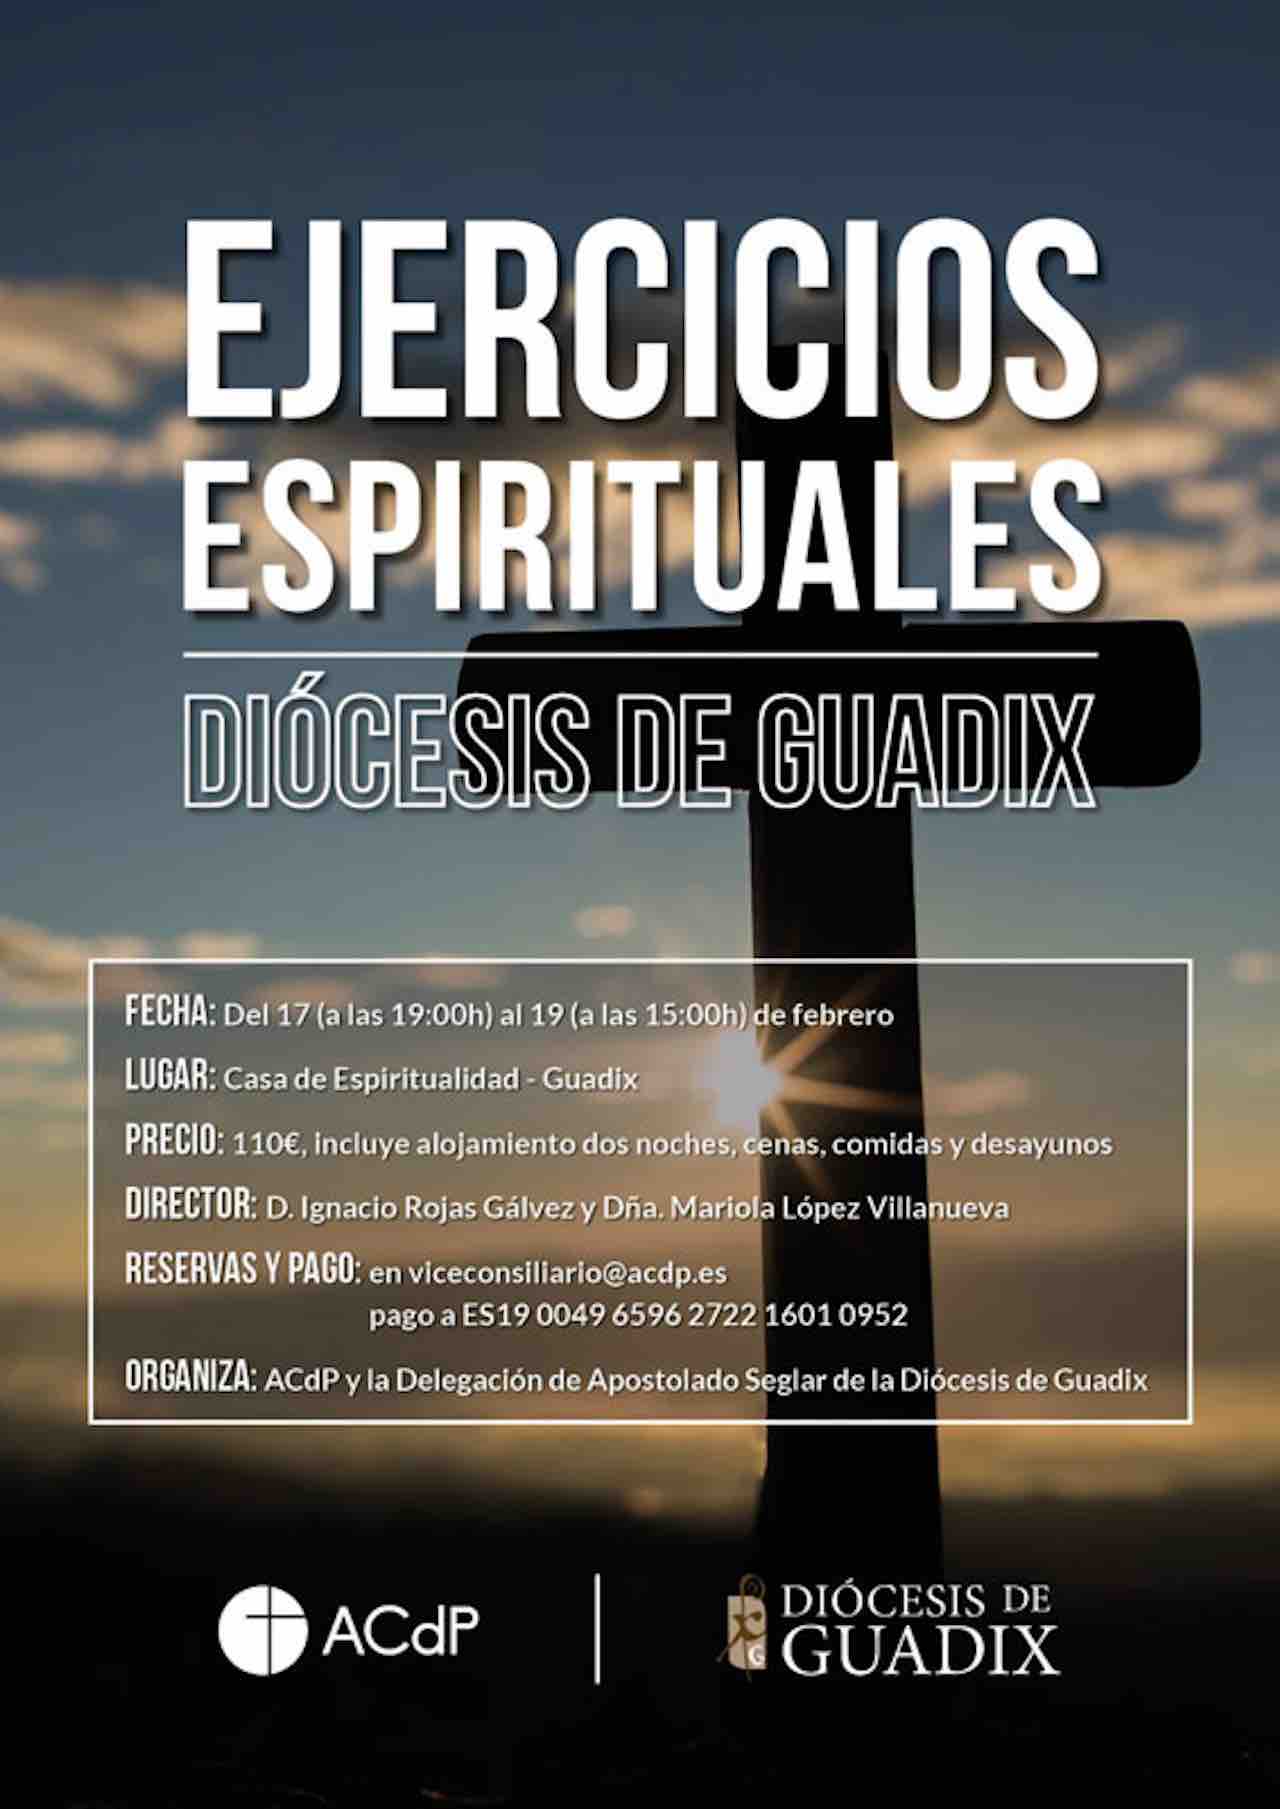 Ejercicios espirituales Guadix Acdp